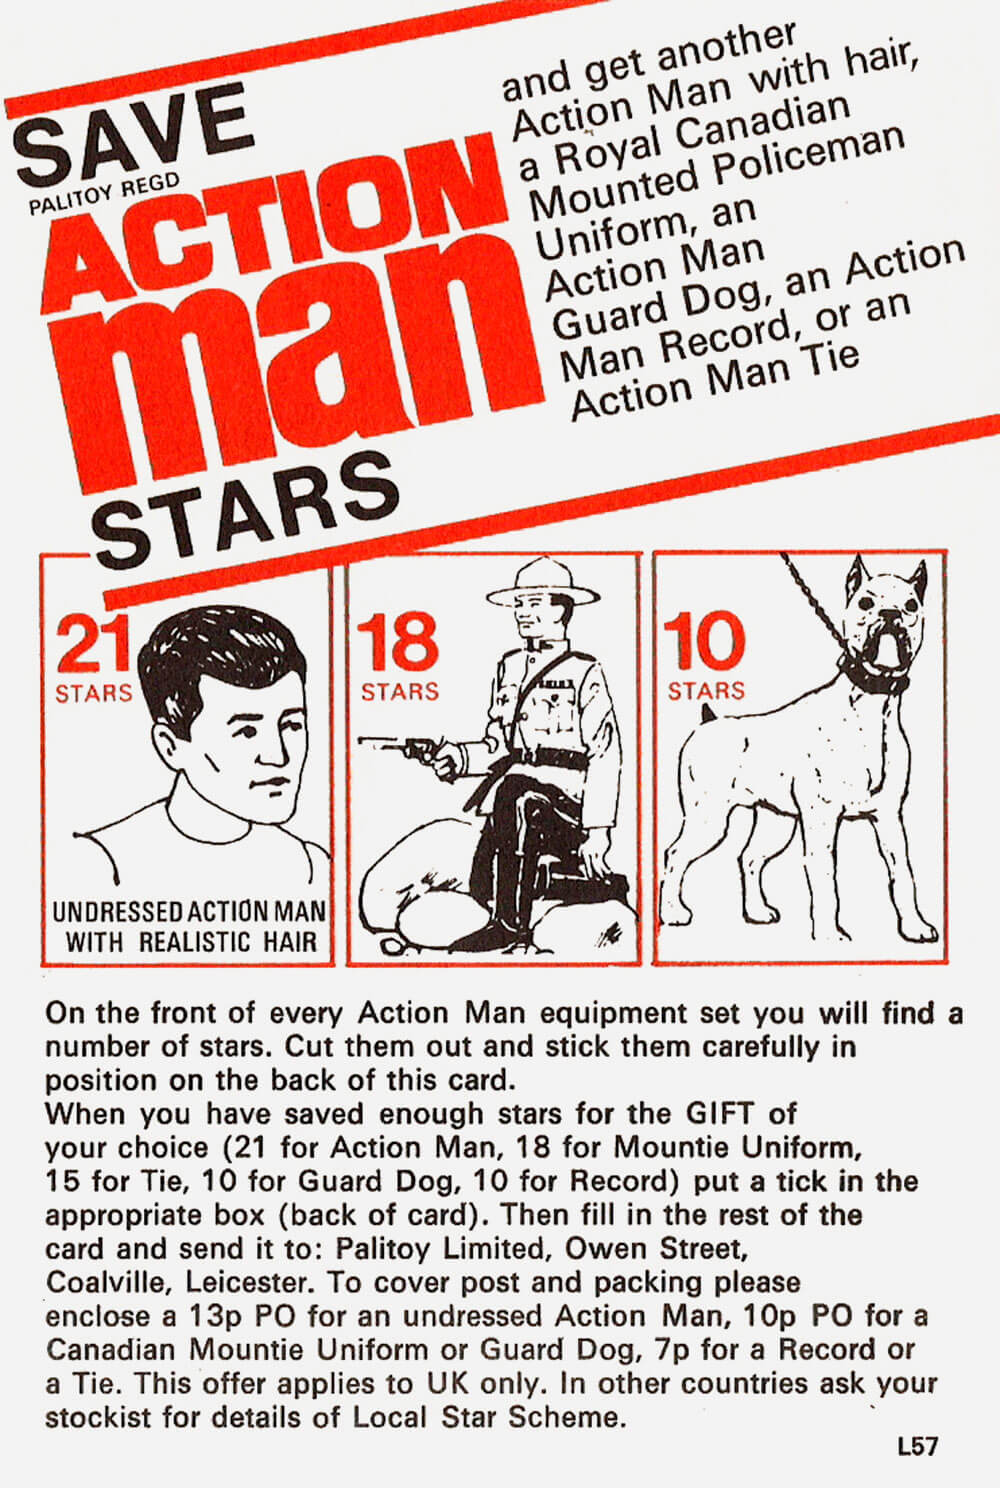 Action Man Star Card L51